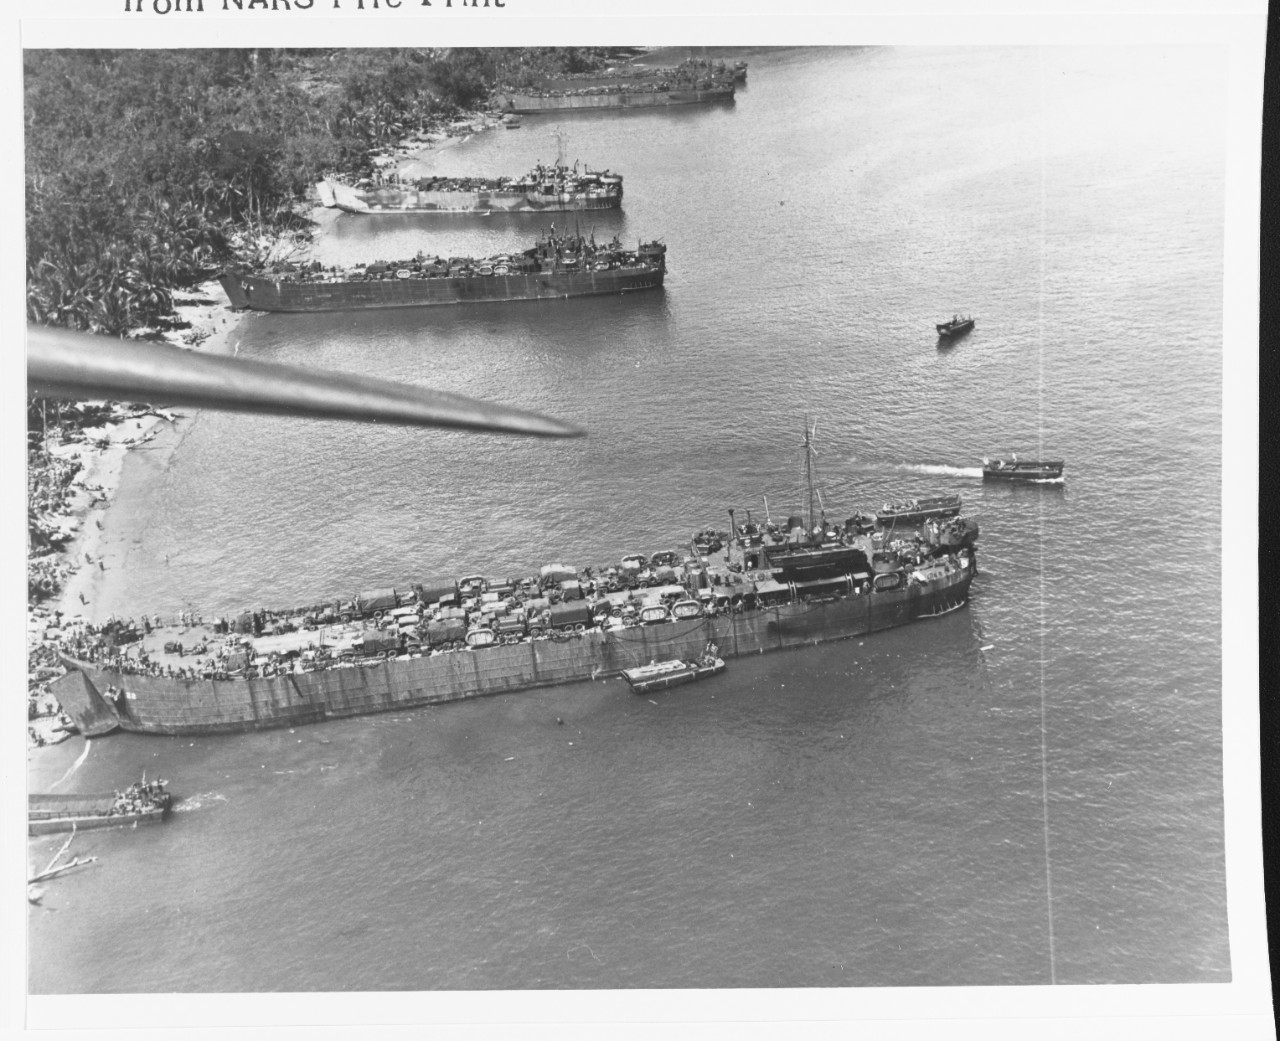 Hollandia , New Guinea, Operation, April 1944.